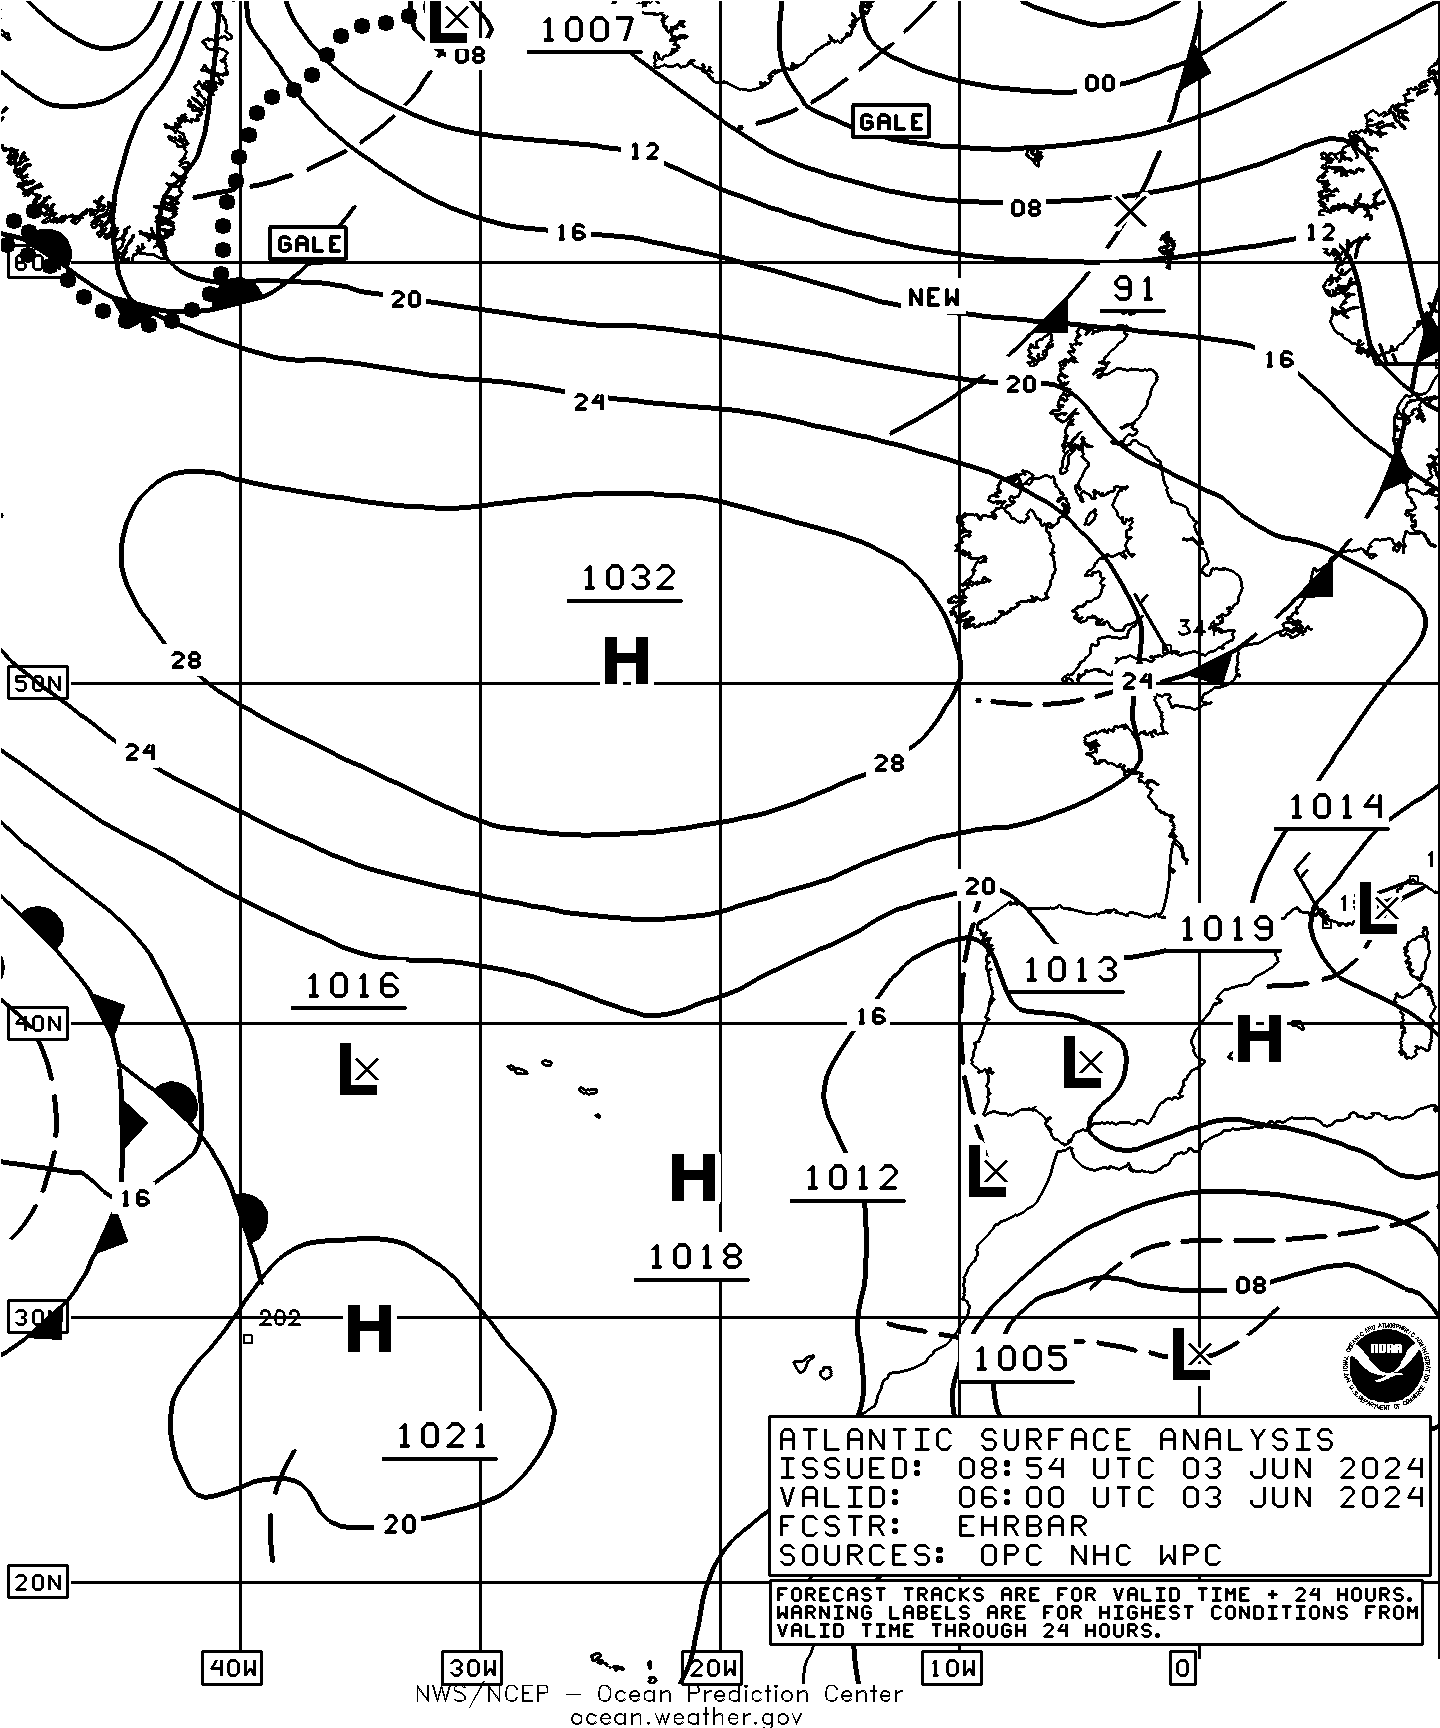 Image of East Atlantic Surface Analysis